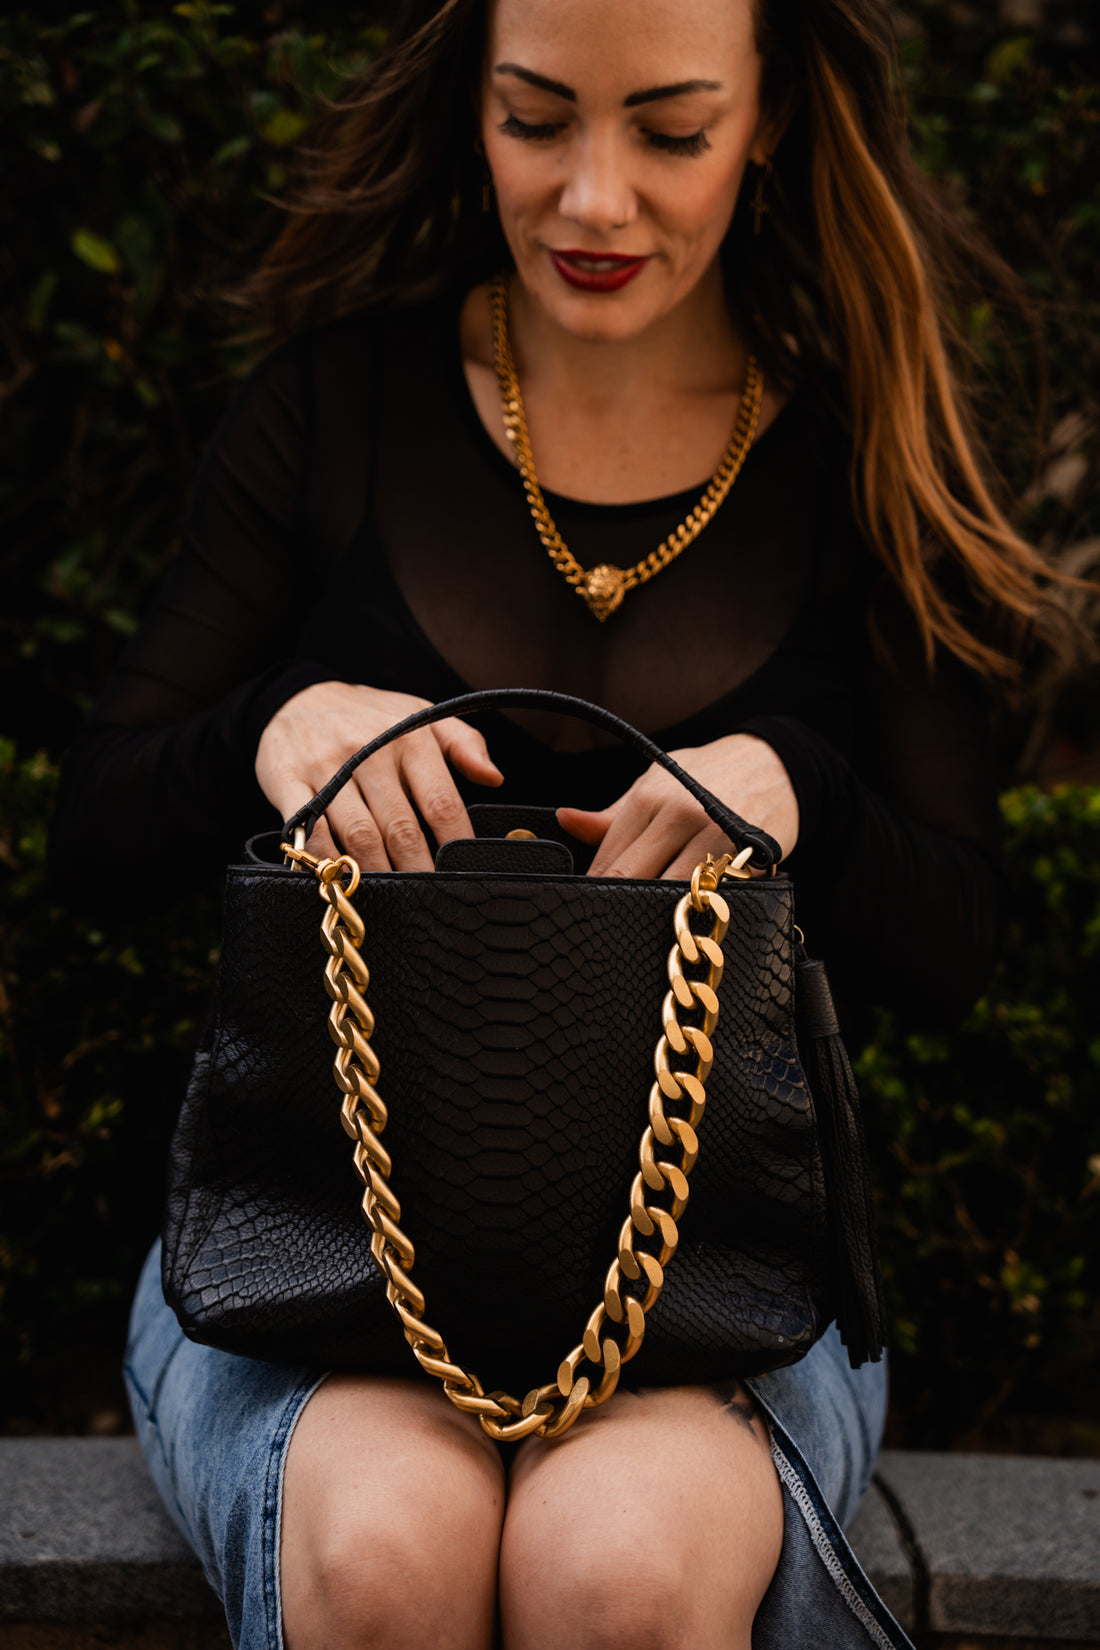 Leather Handbag with gold chain - Marlene Black